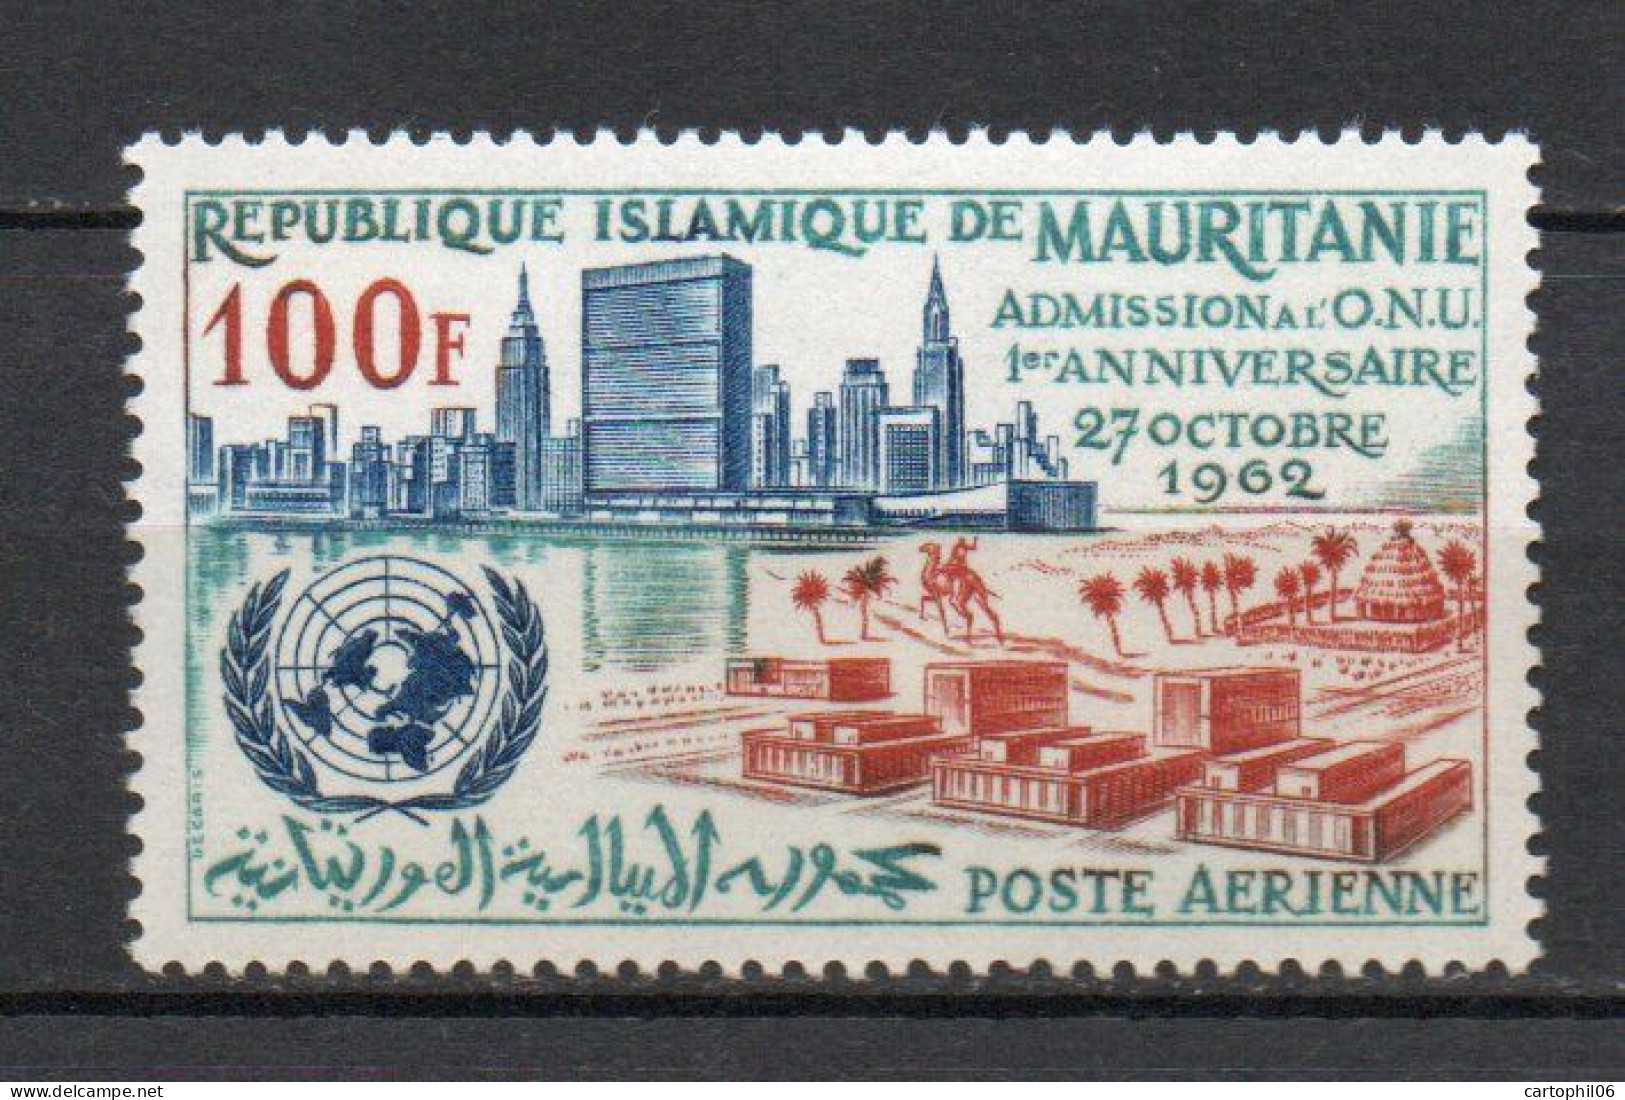 - MAURITANIE Poste Aérienne N° 22 Neuf ** MNH - 100 F. ADMISSION AUX NATIONS UNIES 1962 - Cote 16,00 € - - Mauritania (1960-...)